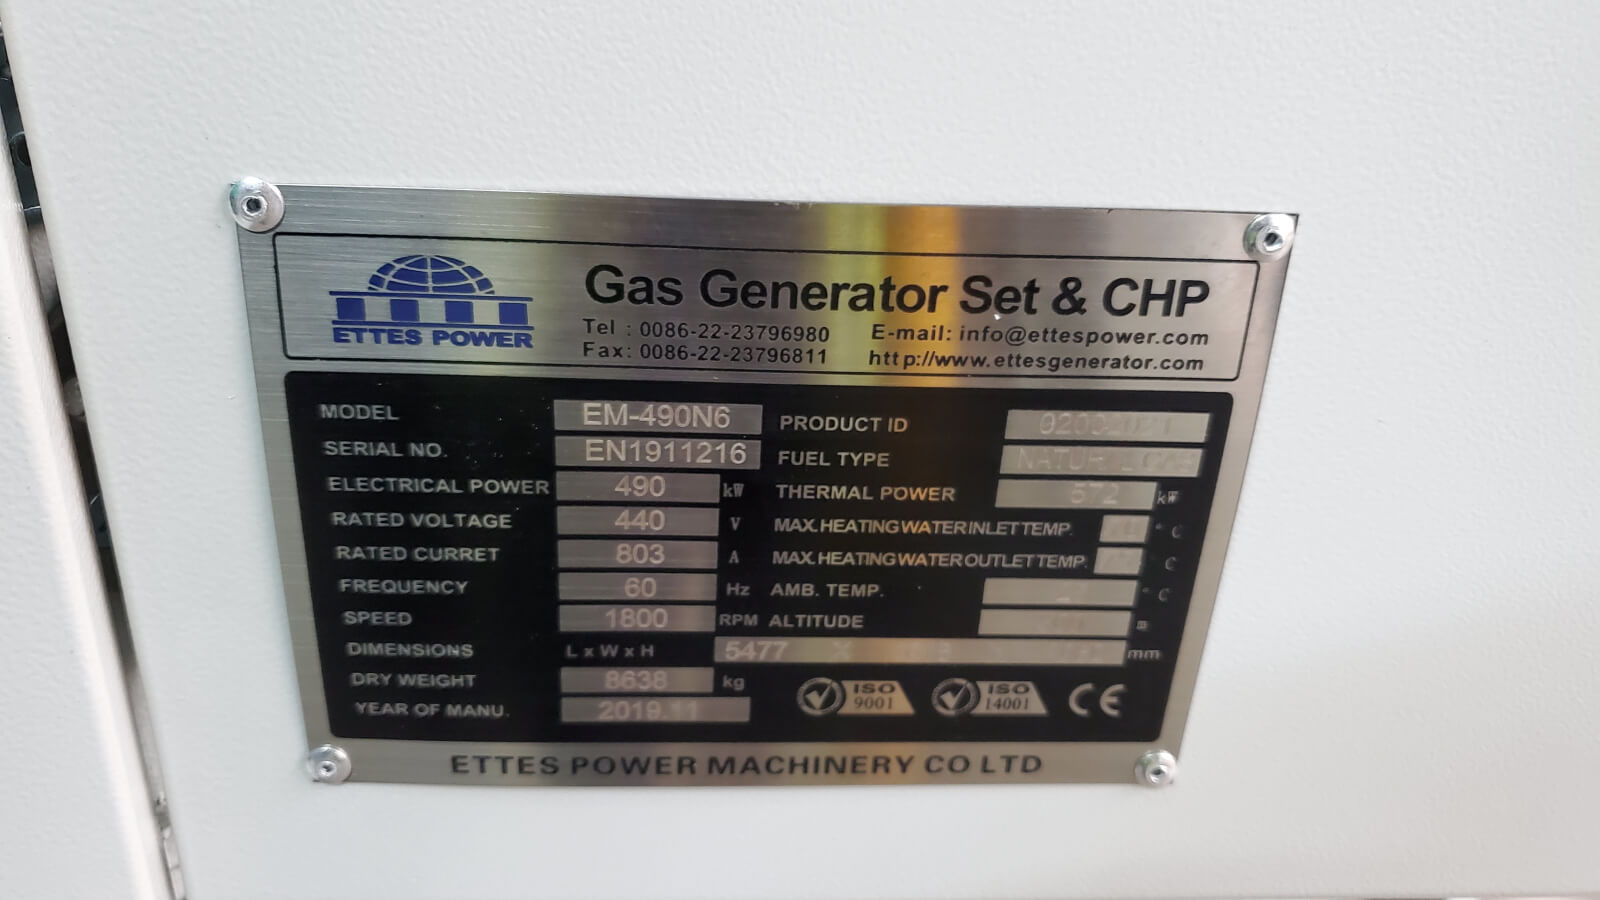 Ettes Power MAN E3262LE202 Natural Gas Generation CHP CCHP EttesPower